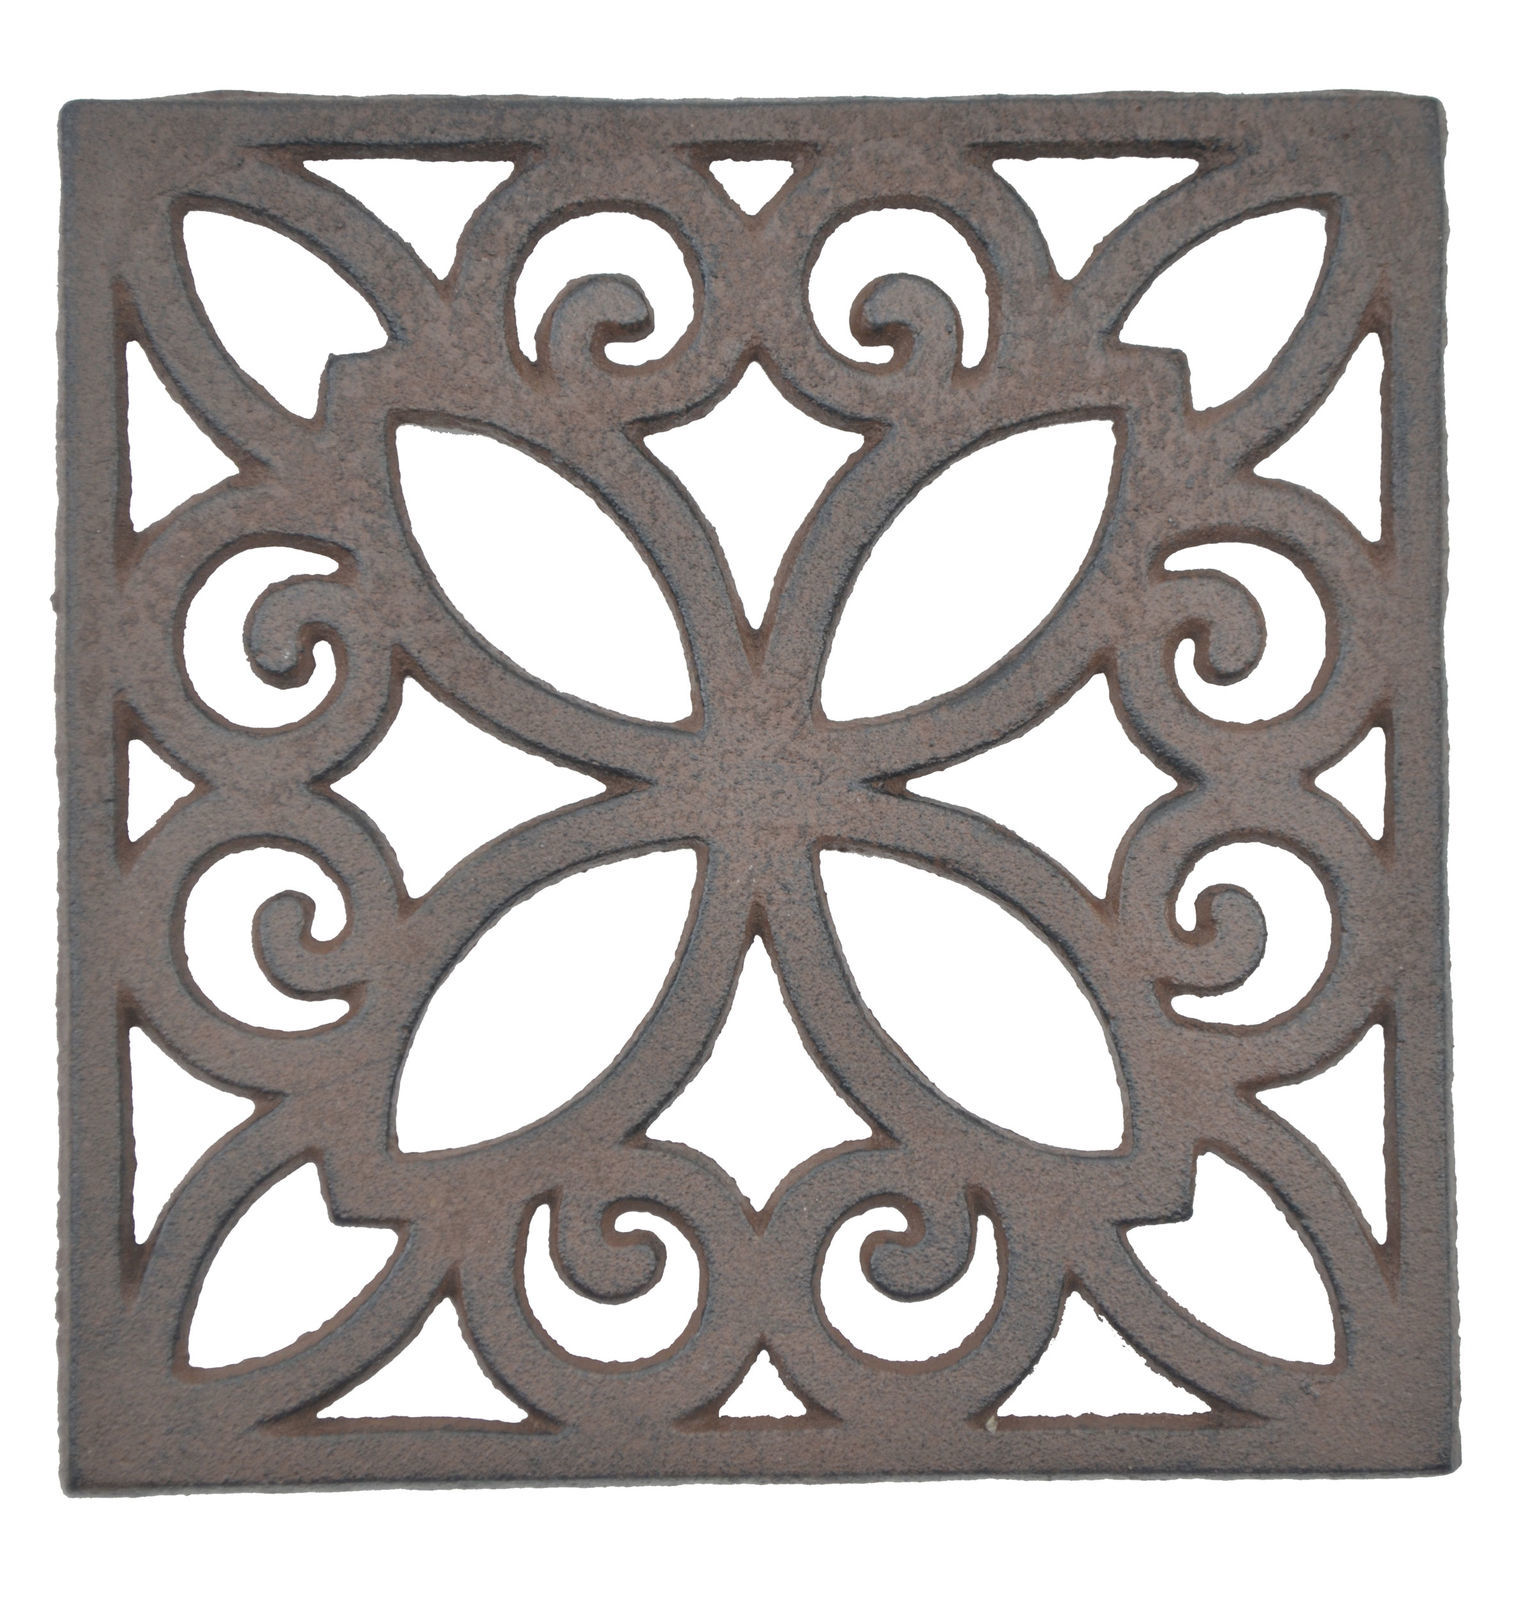 Primary image for Decorative Trivet Square Cast Iron Hot Pad Kitchen Decor